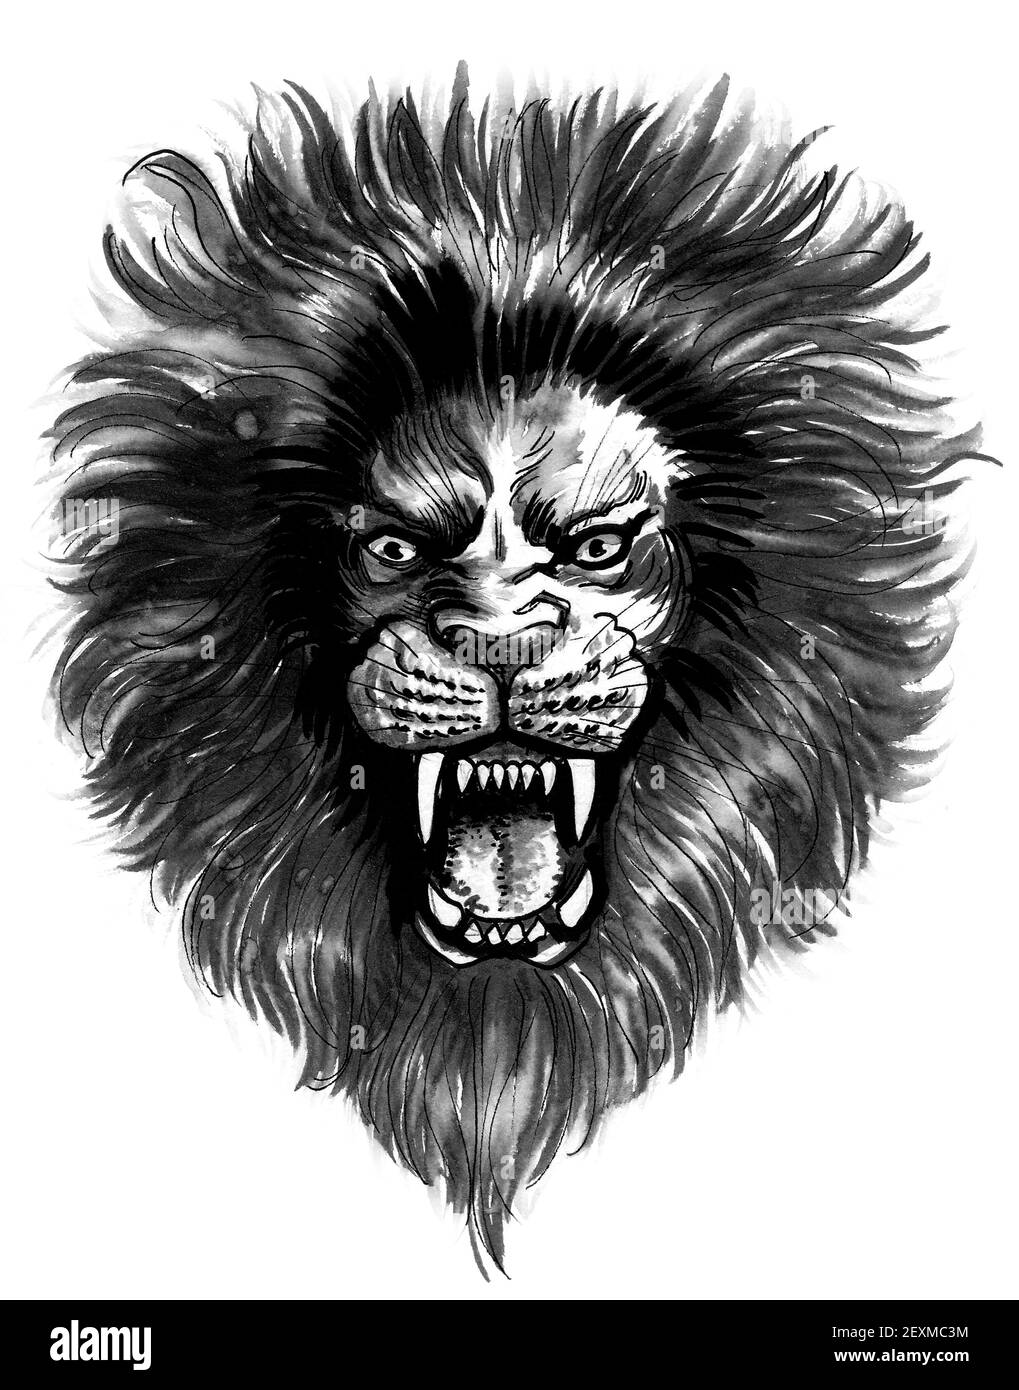 2962 Roaring Lion Sketch Images Stock Photos  Vectors  Shutterstock